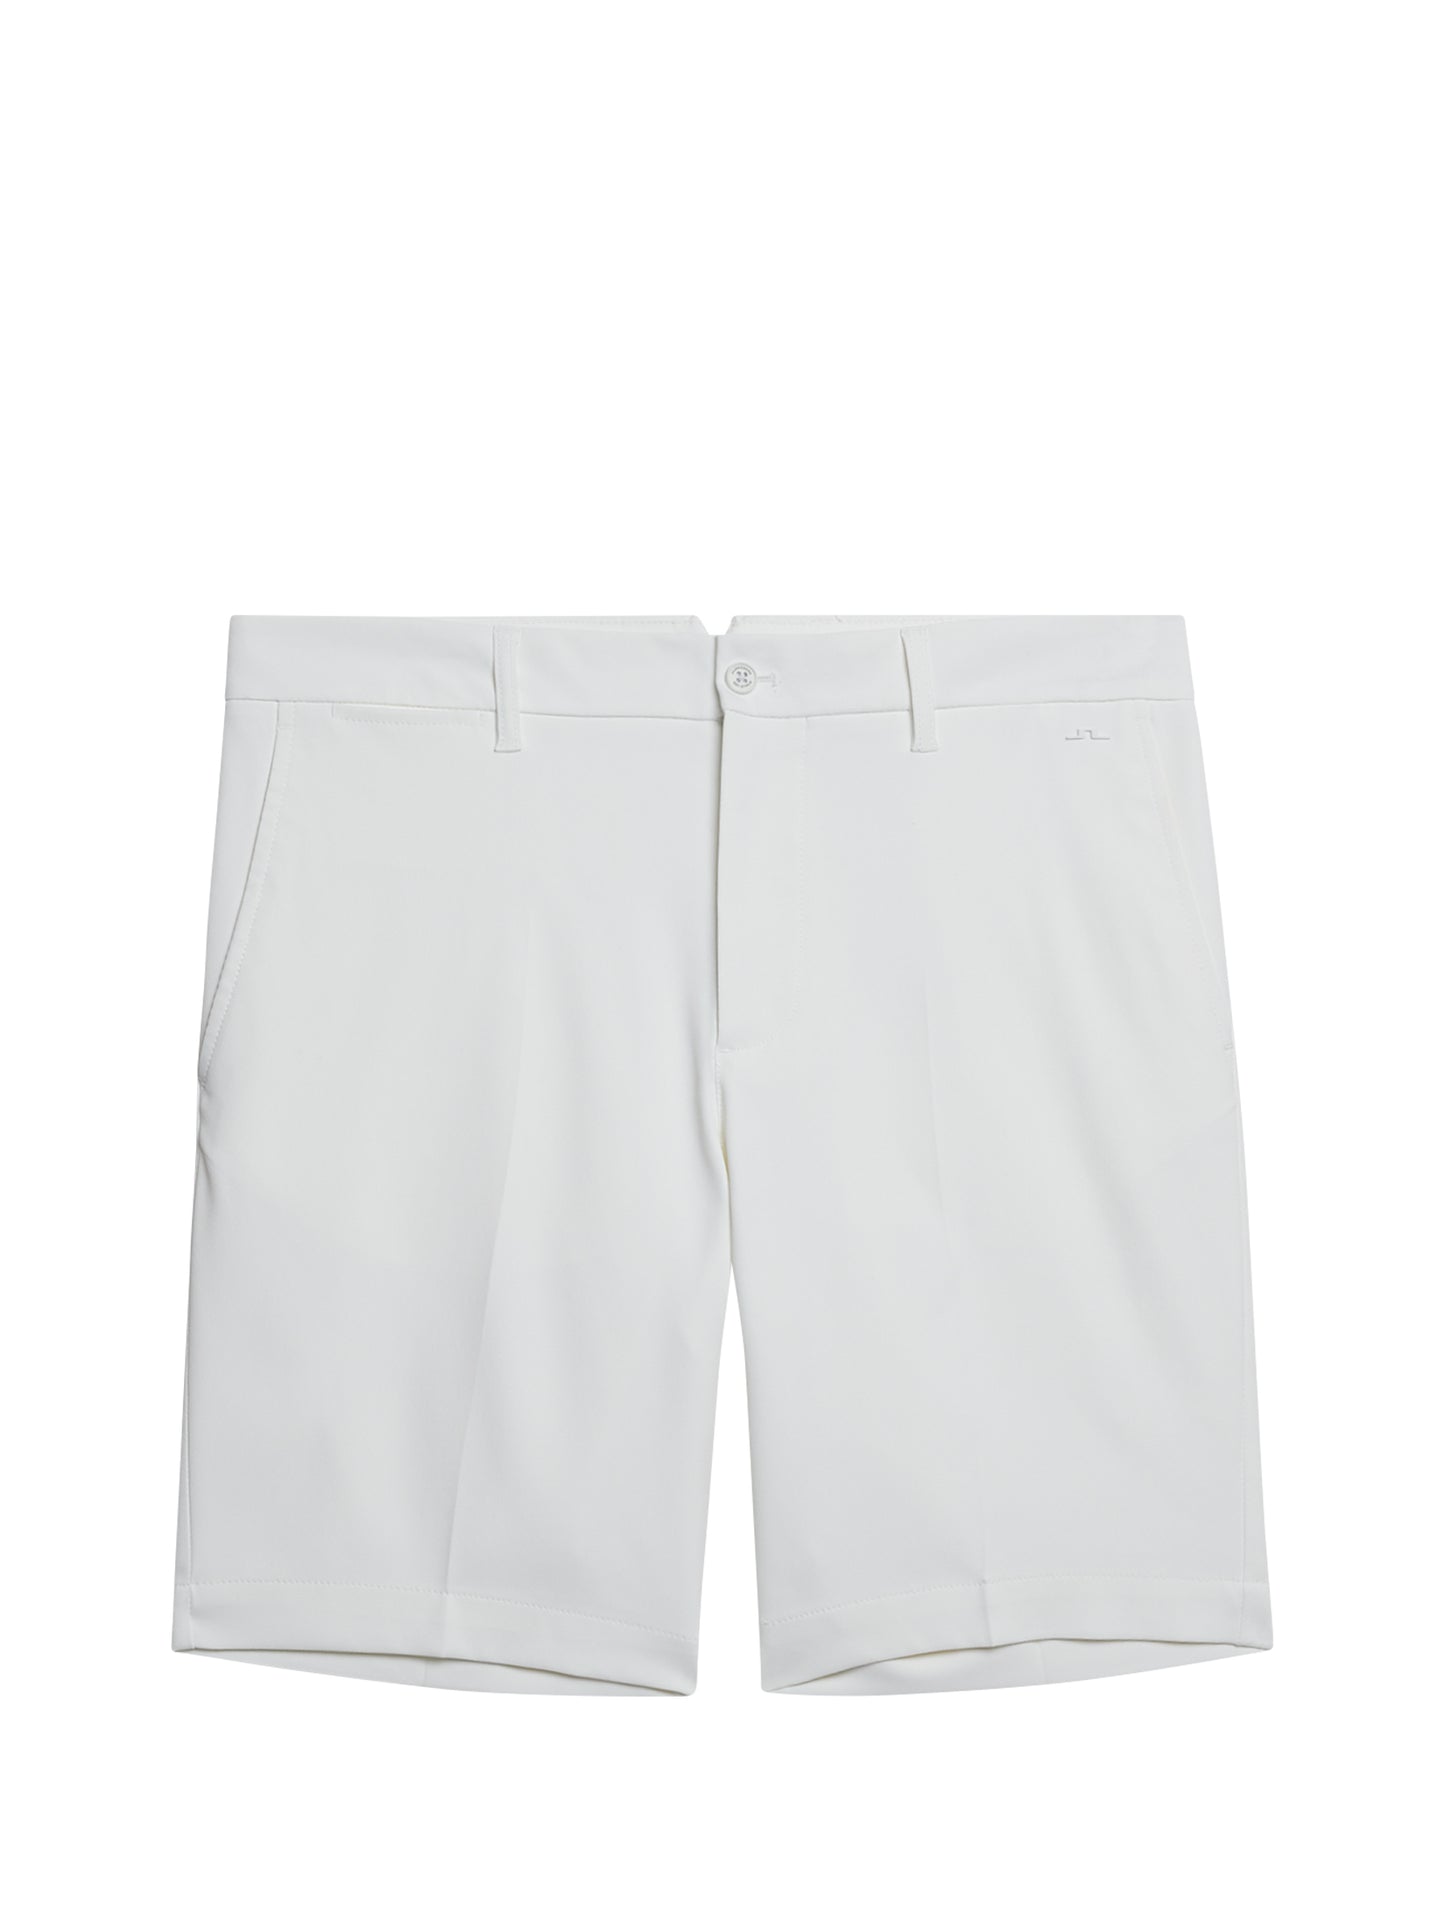 Eloy Shorts / White